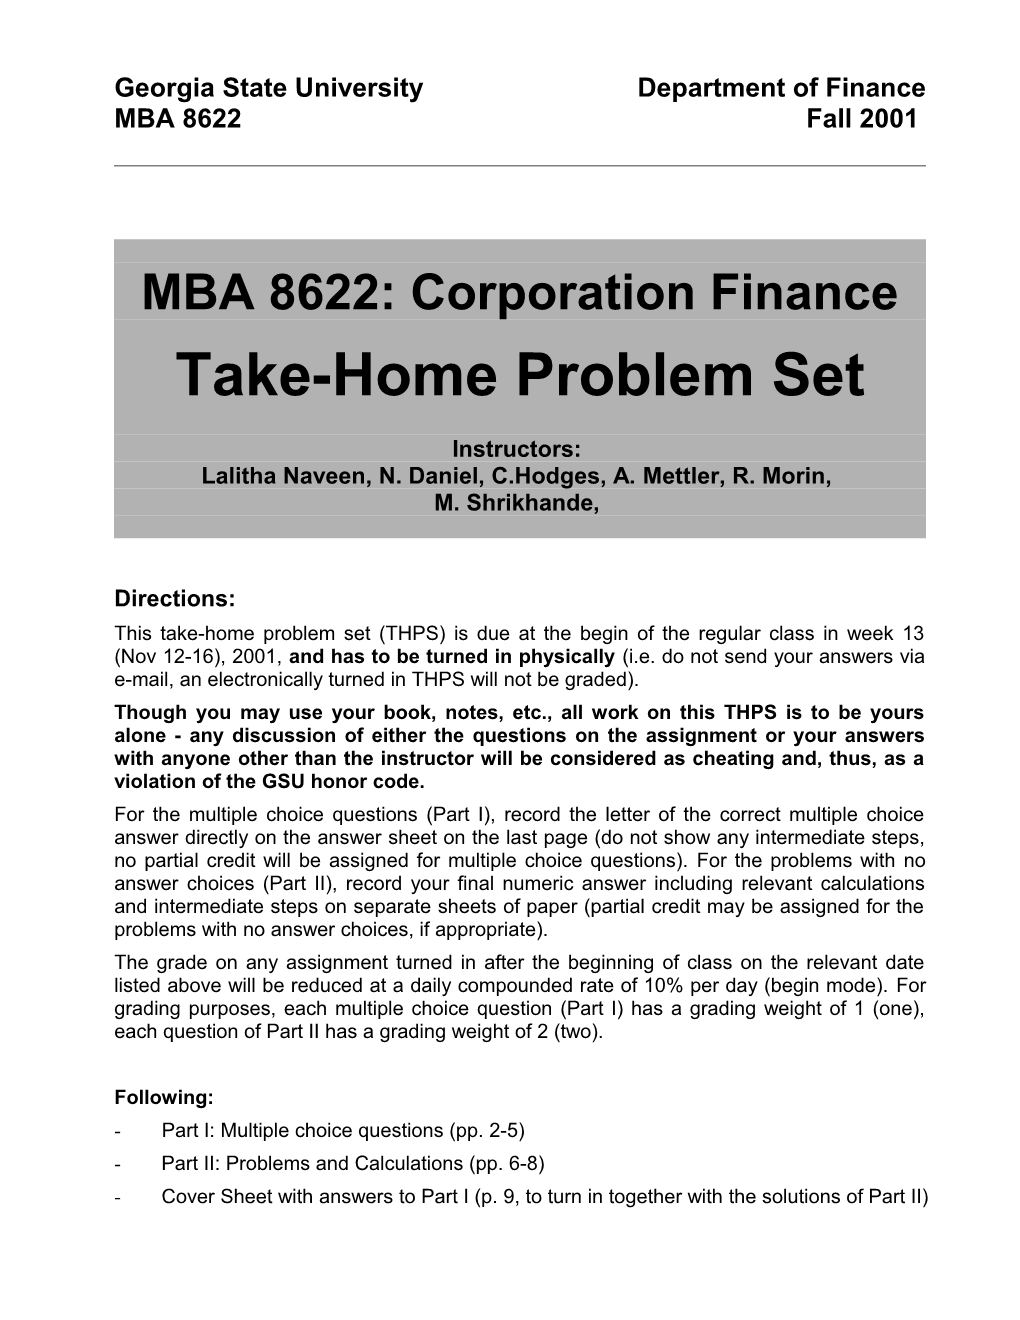 GSU, Department of Finance - Take-Home Problem Set / Page 3 - Corporation Finance